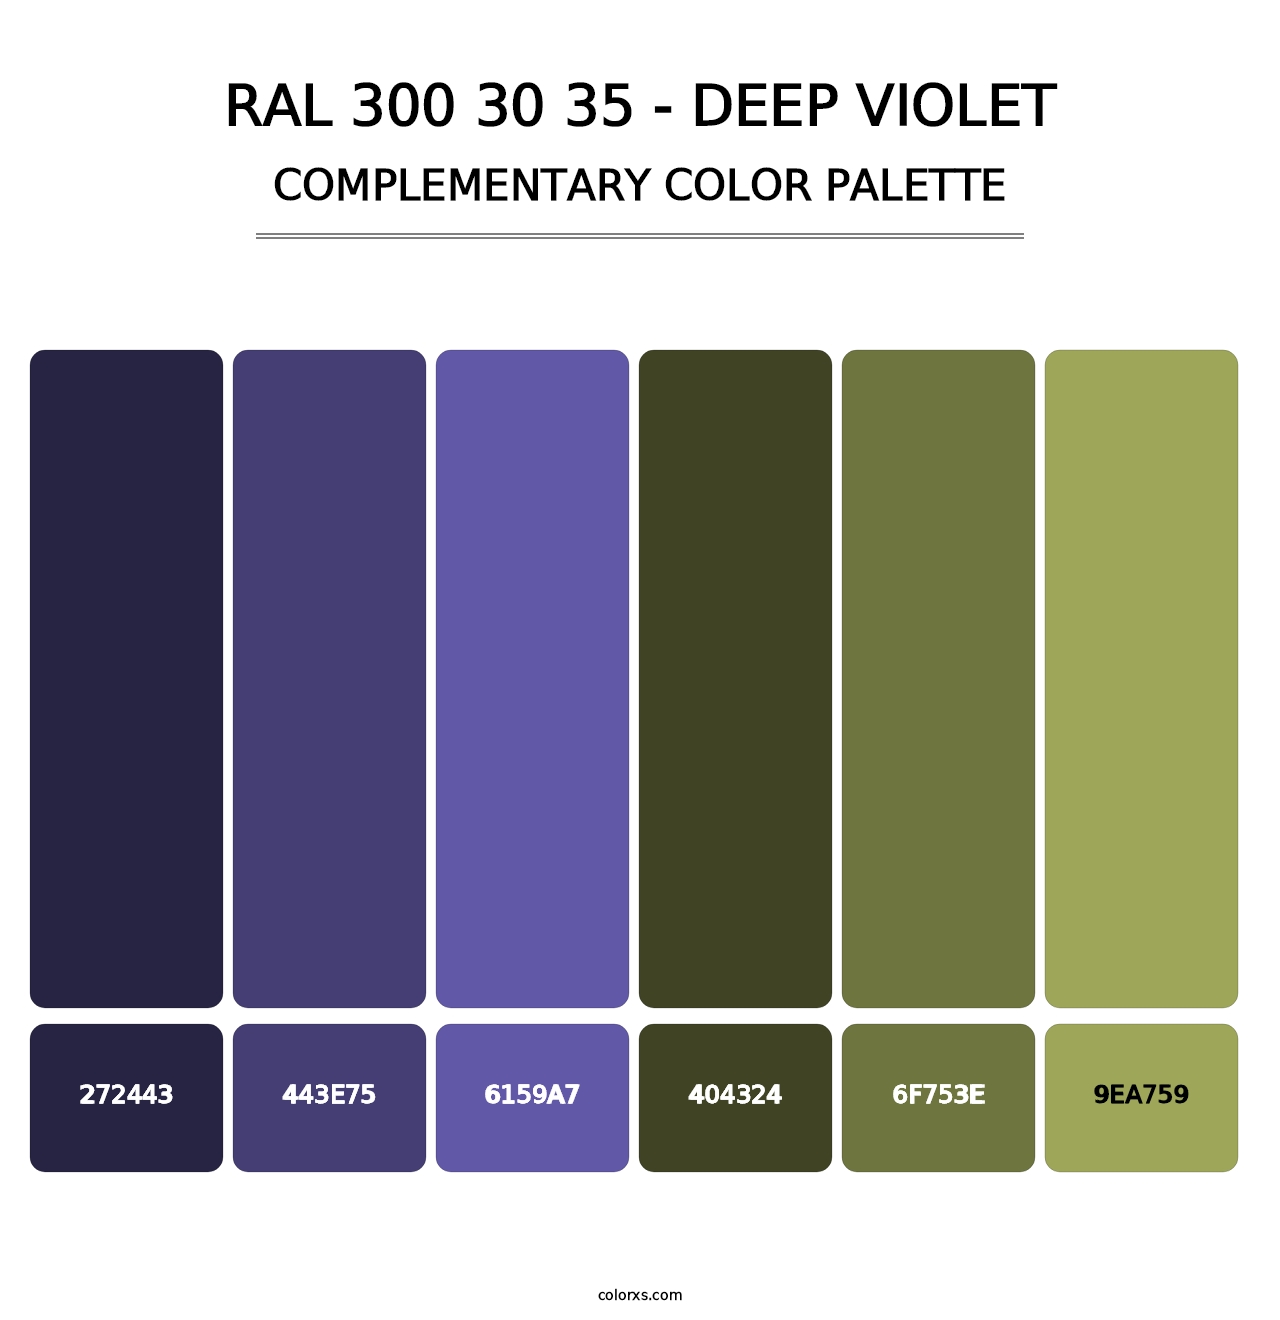 RAL 300 30 35 - Deep Violet - Complementary Color Palette